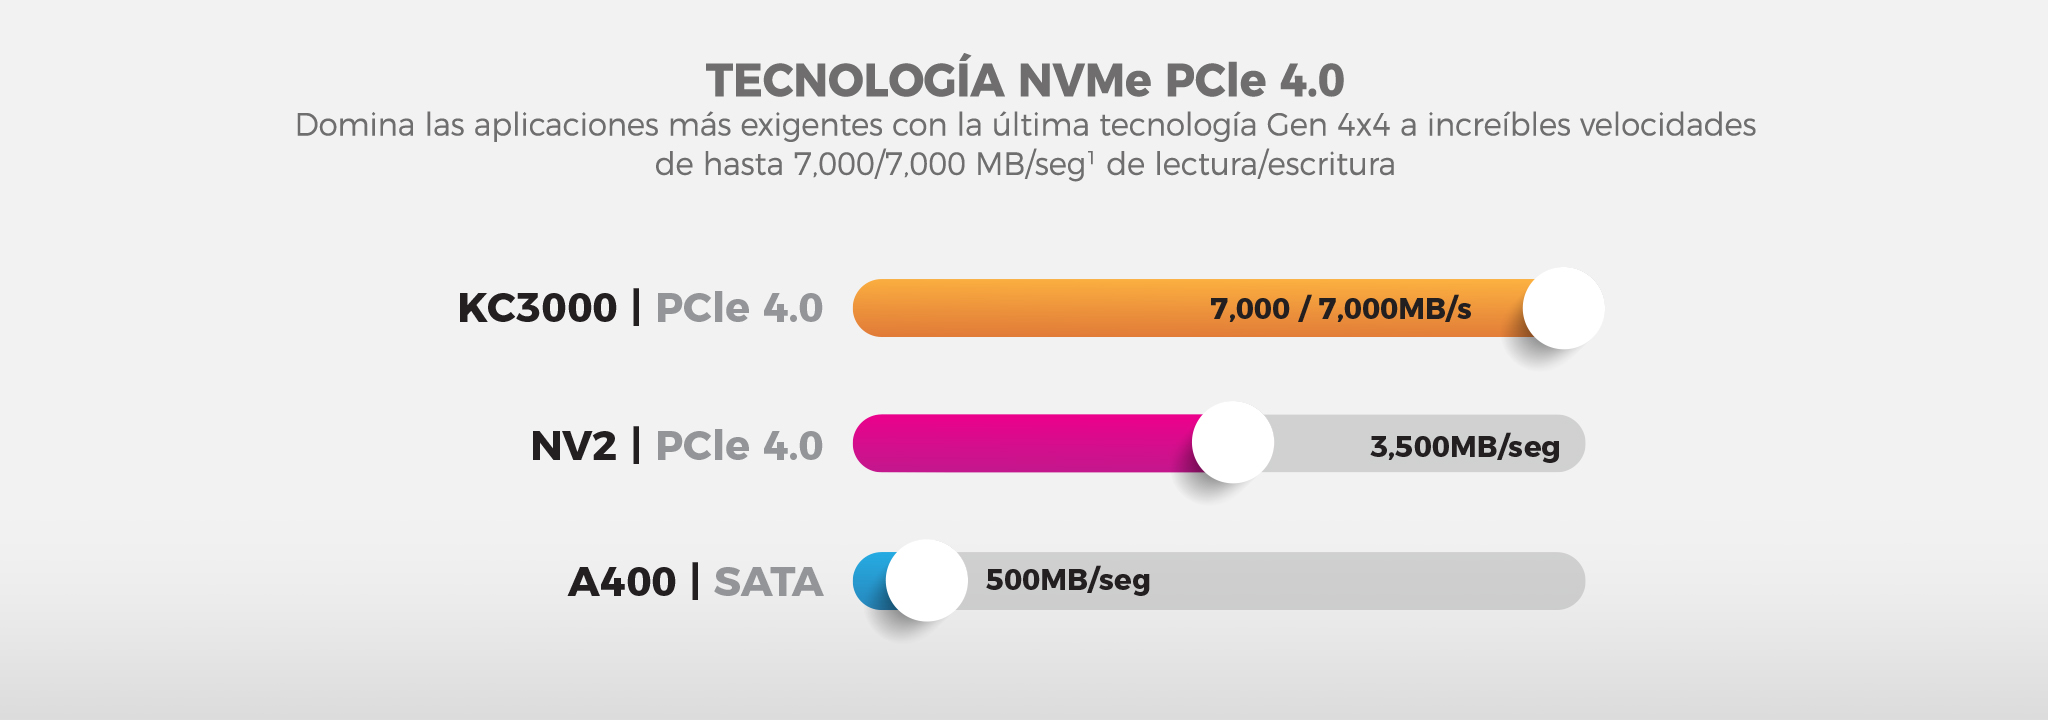 Technología NVMe PCIe 4.0